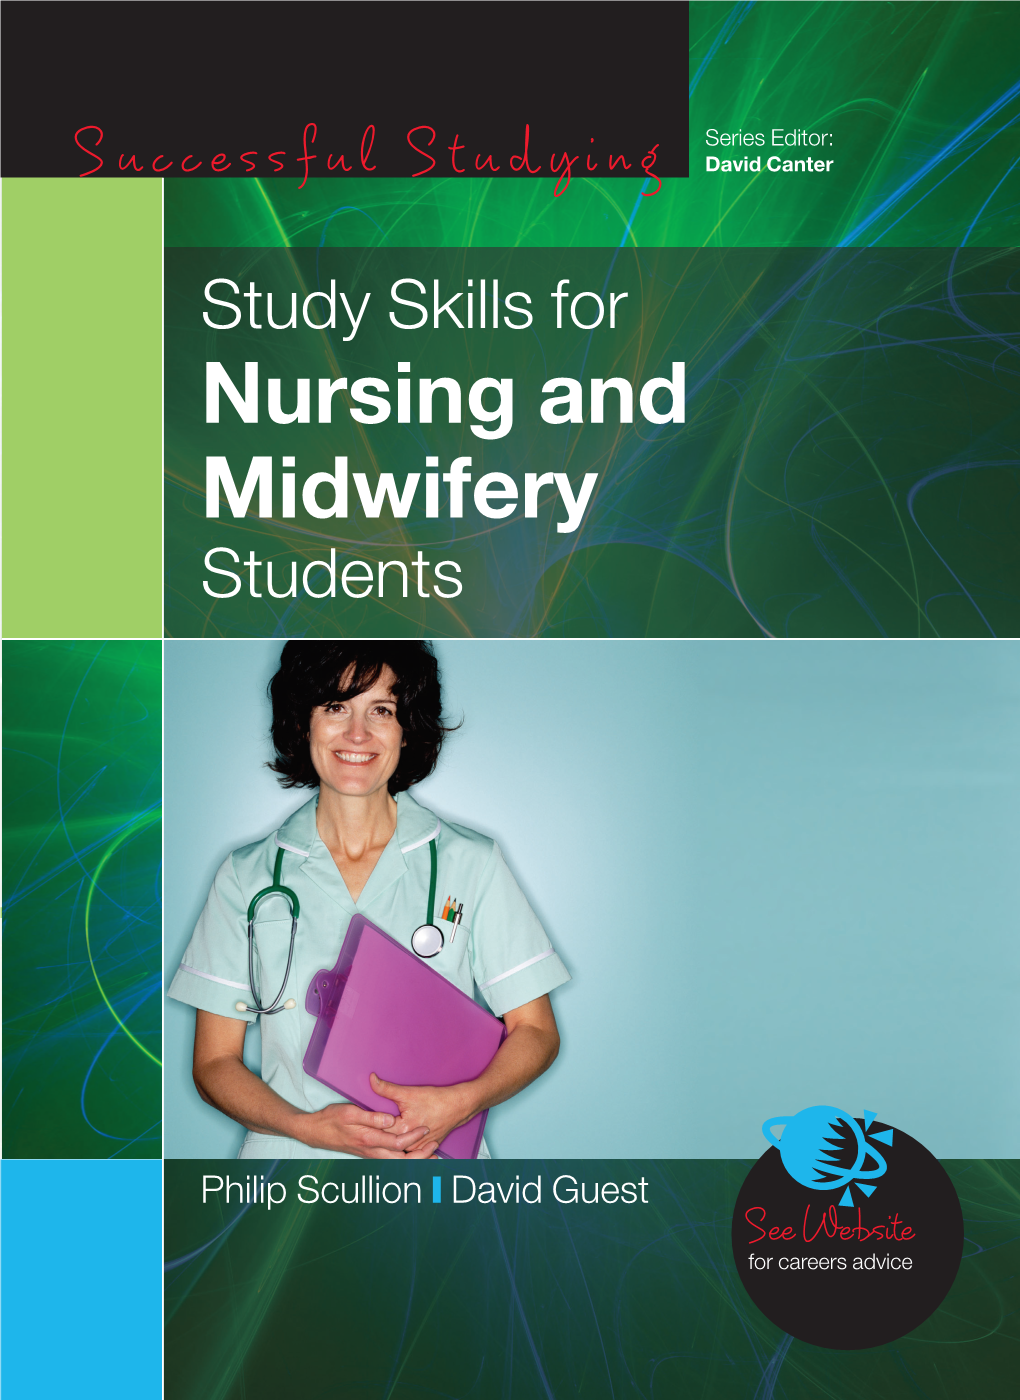 Nursing and Midwifery